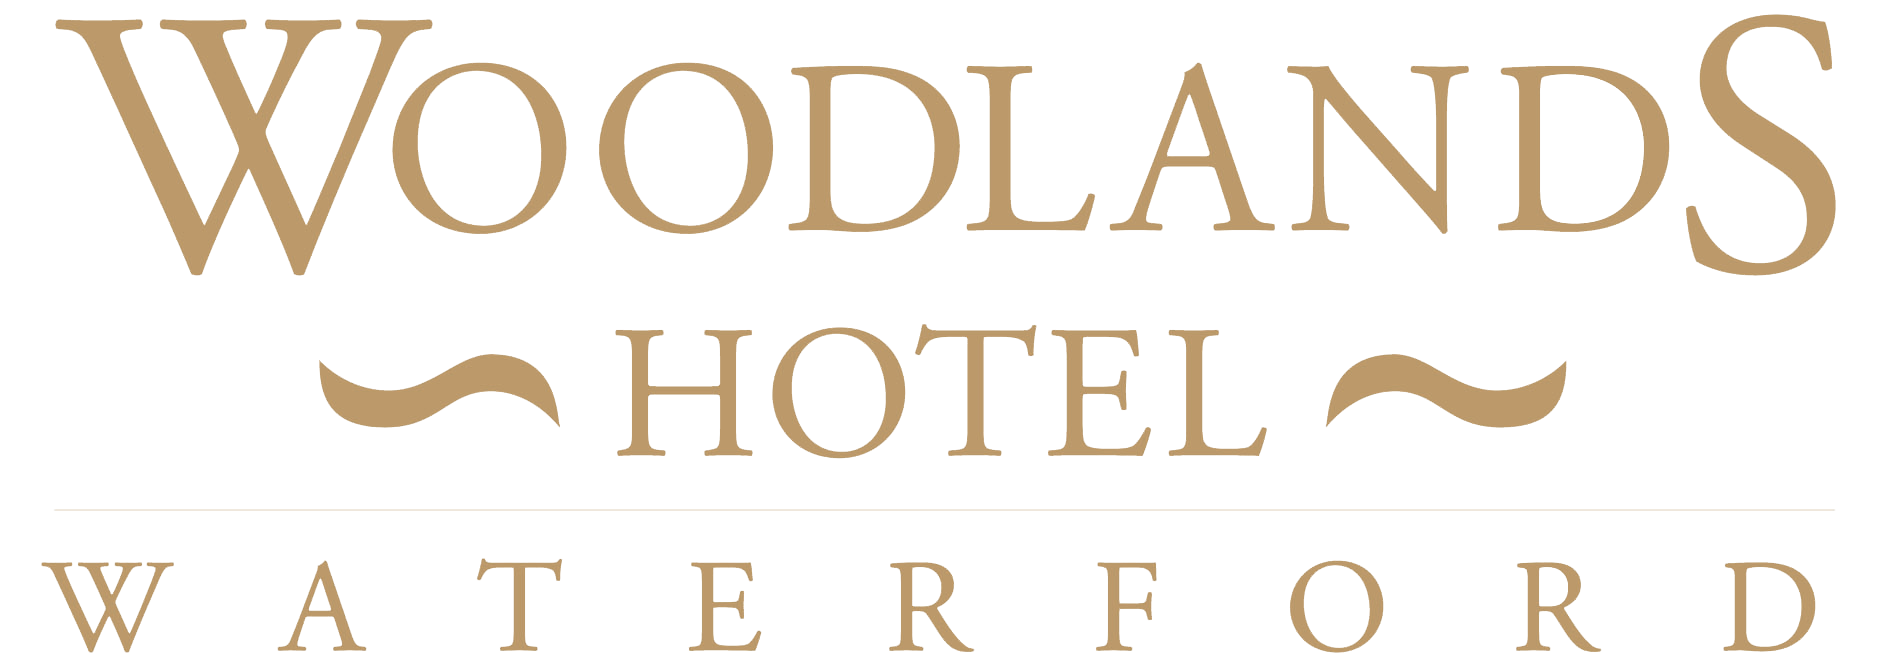 Woodlands Hotel